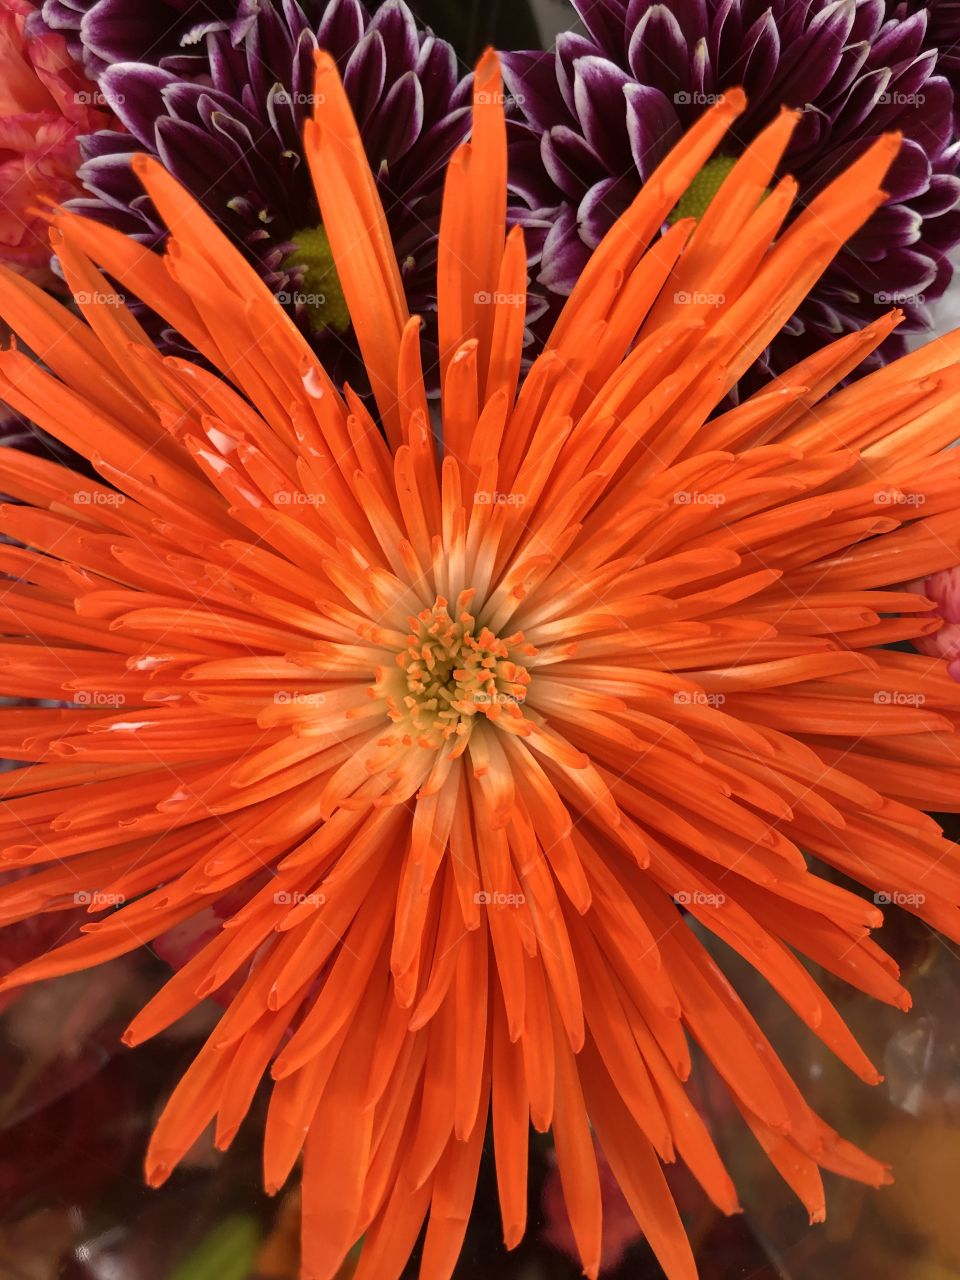 Orange flower up close 